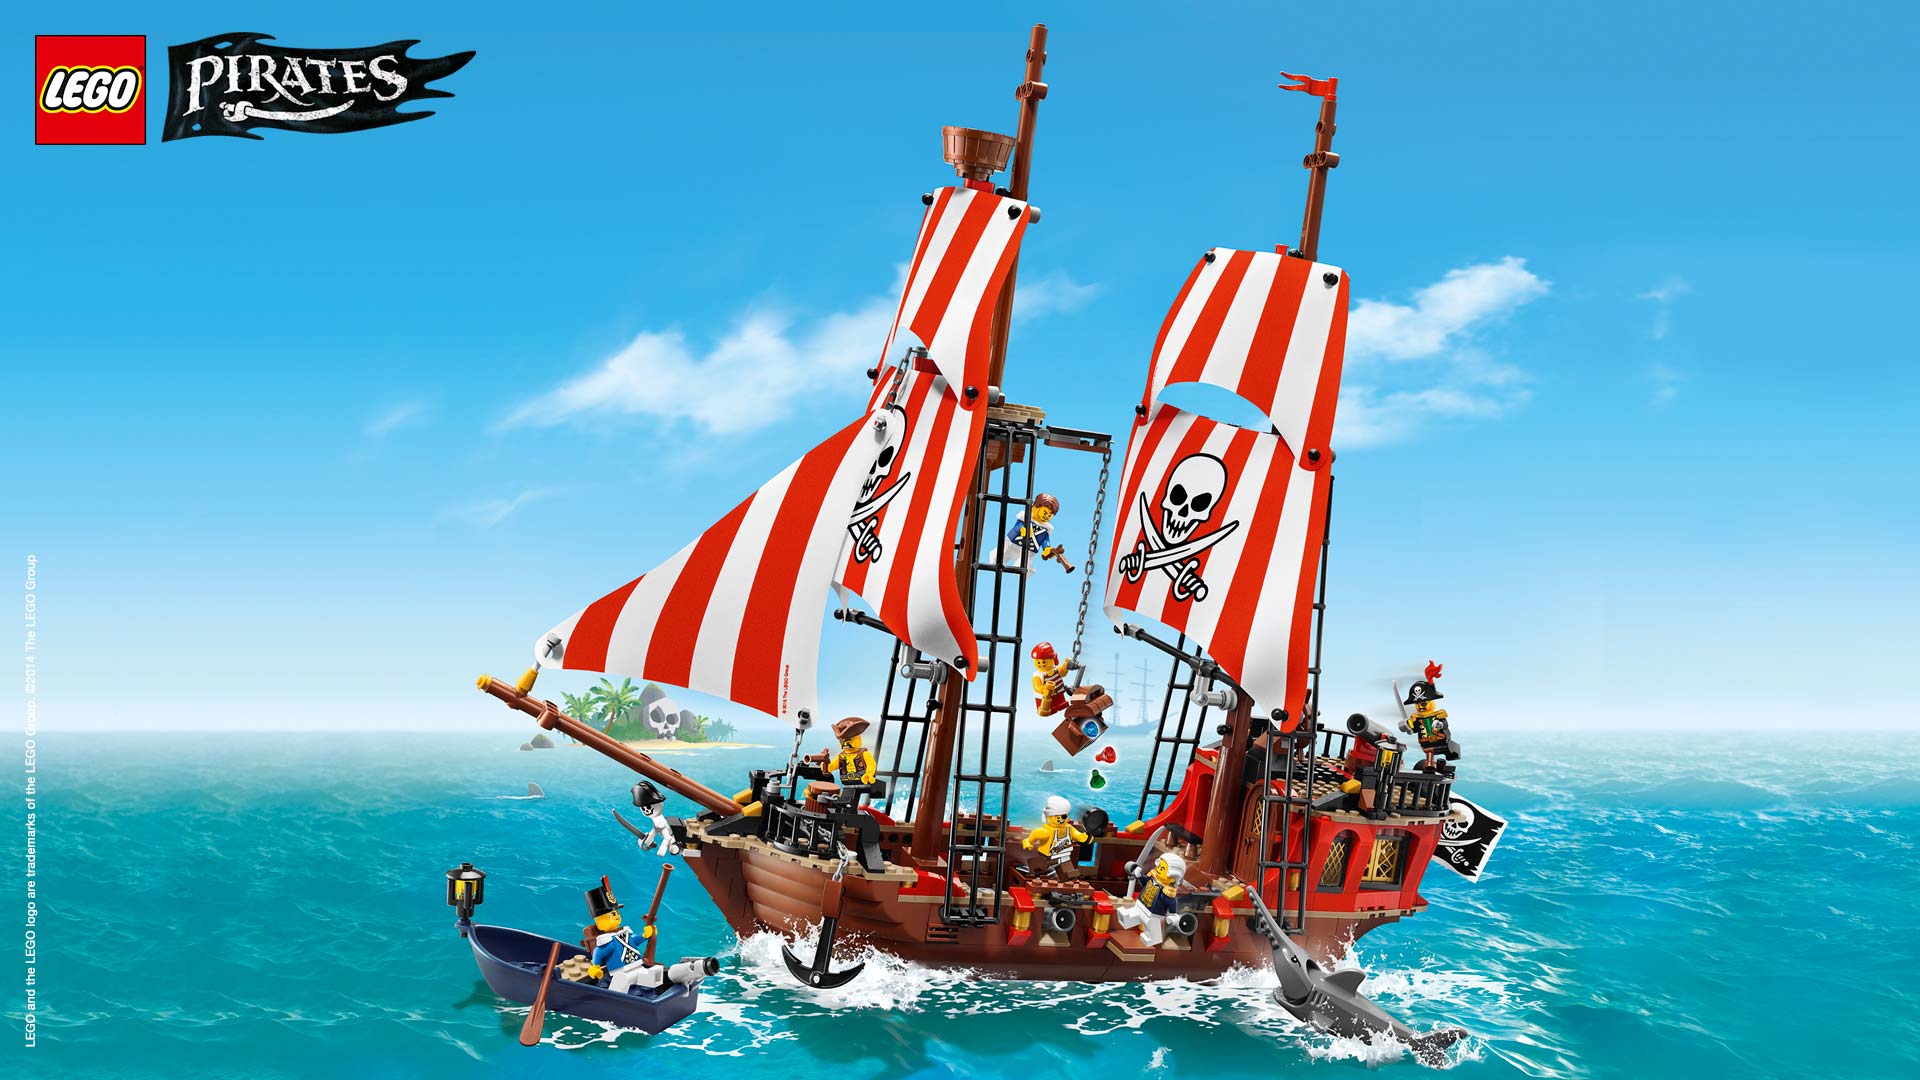 Pirate Ship Wallpaper S Pirates Lego